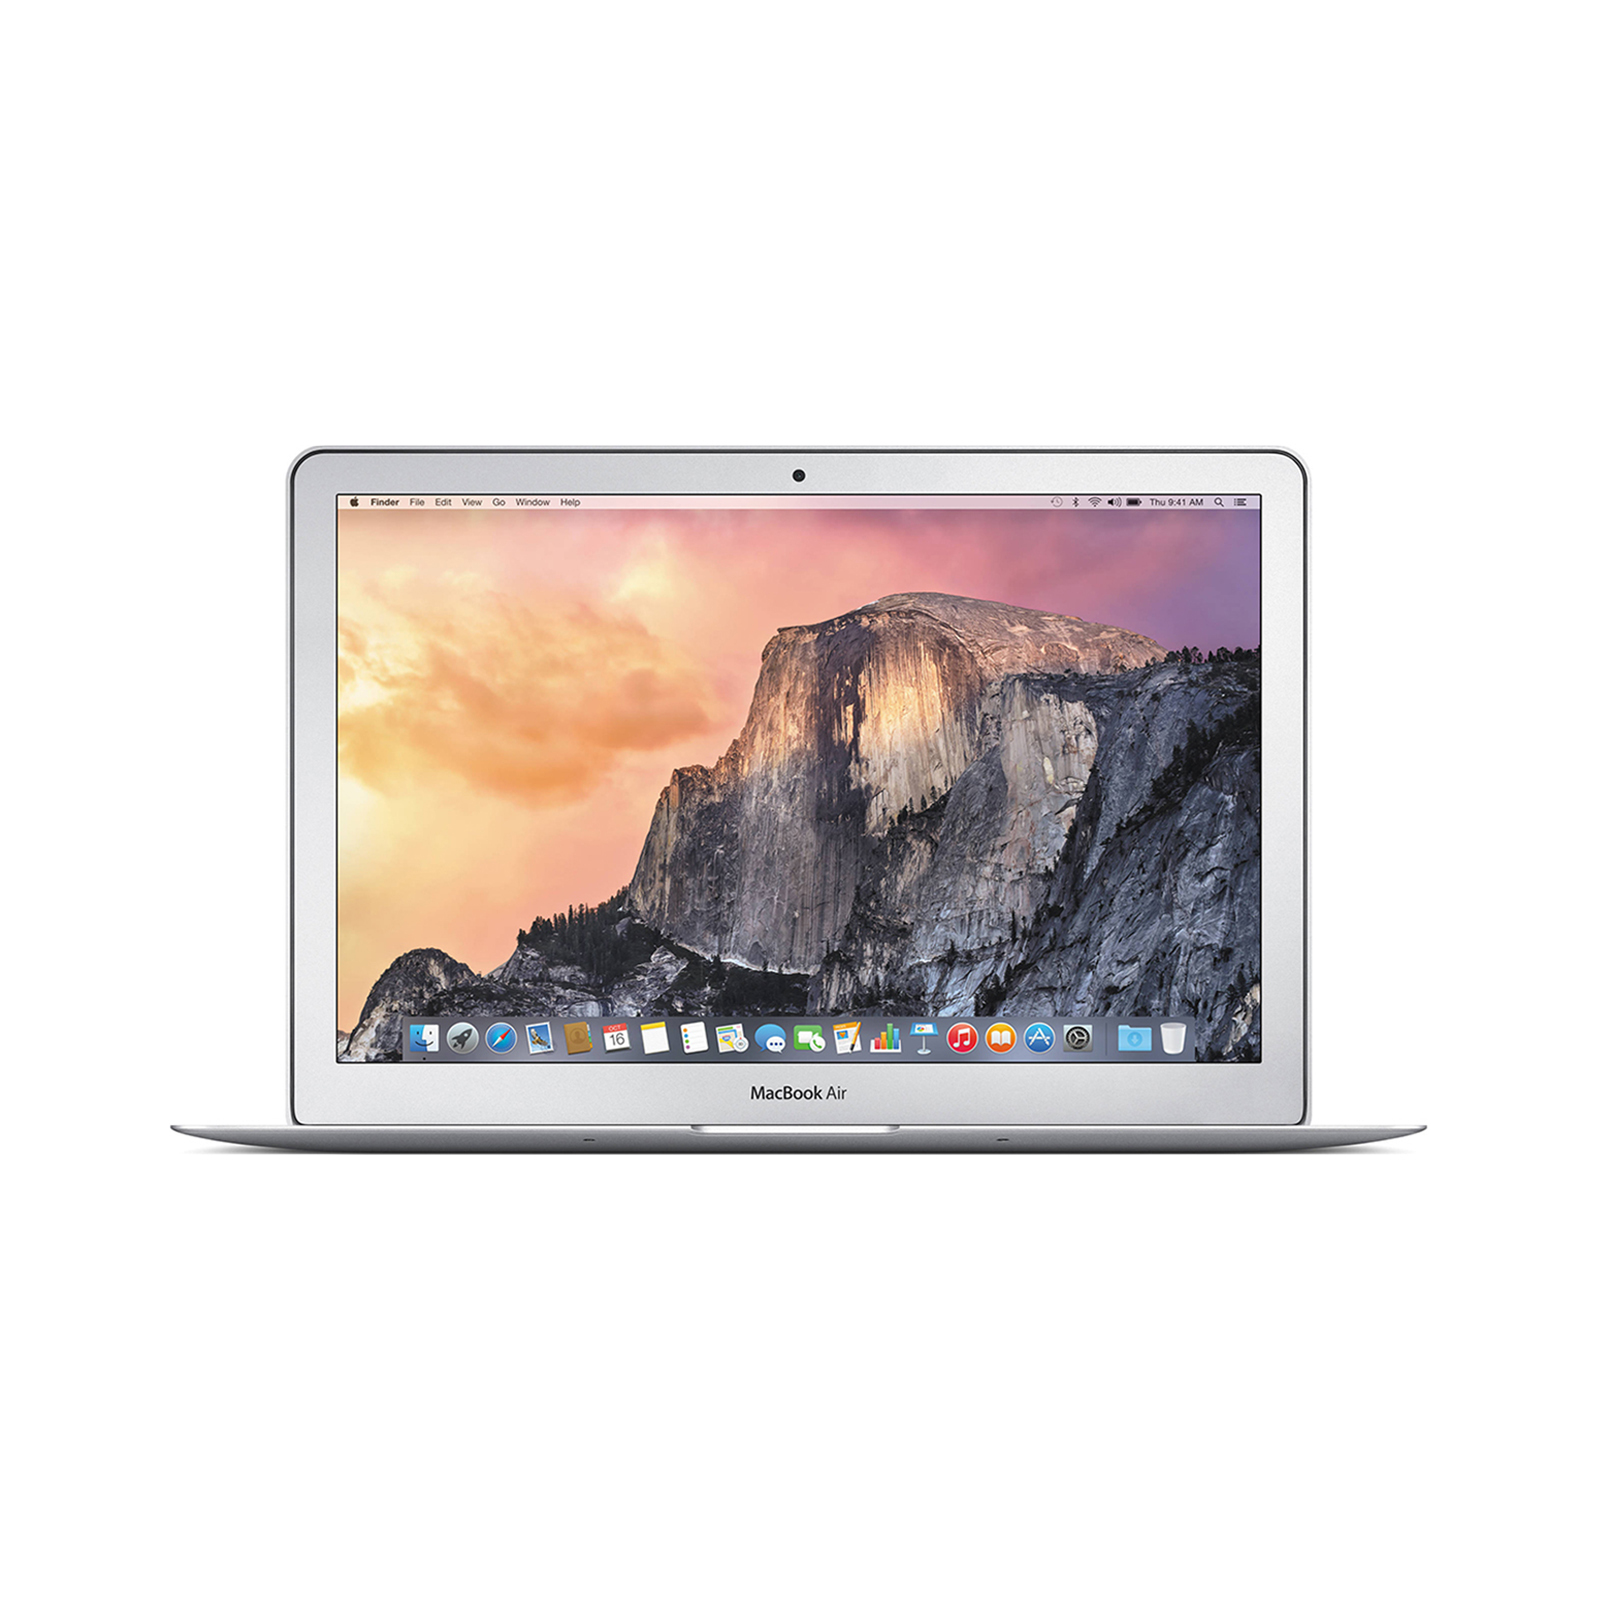 MacBook Air (11-inch, Early 2014) Intel Core i5 1.4 GHz 4GB 128GB